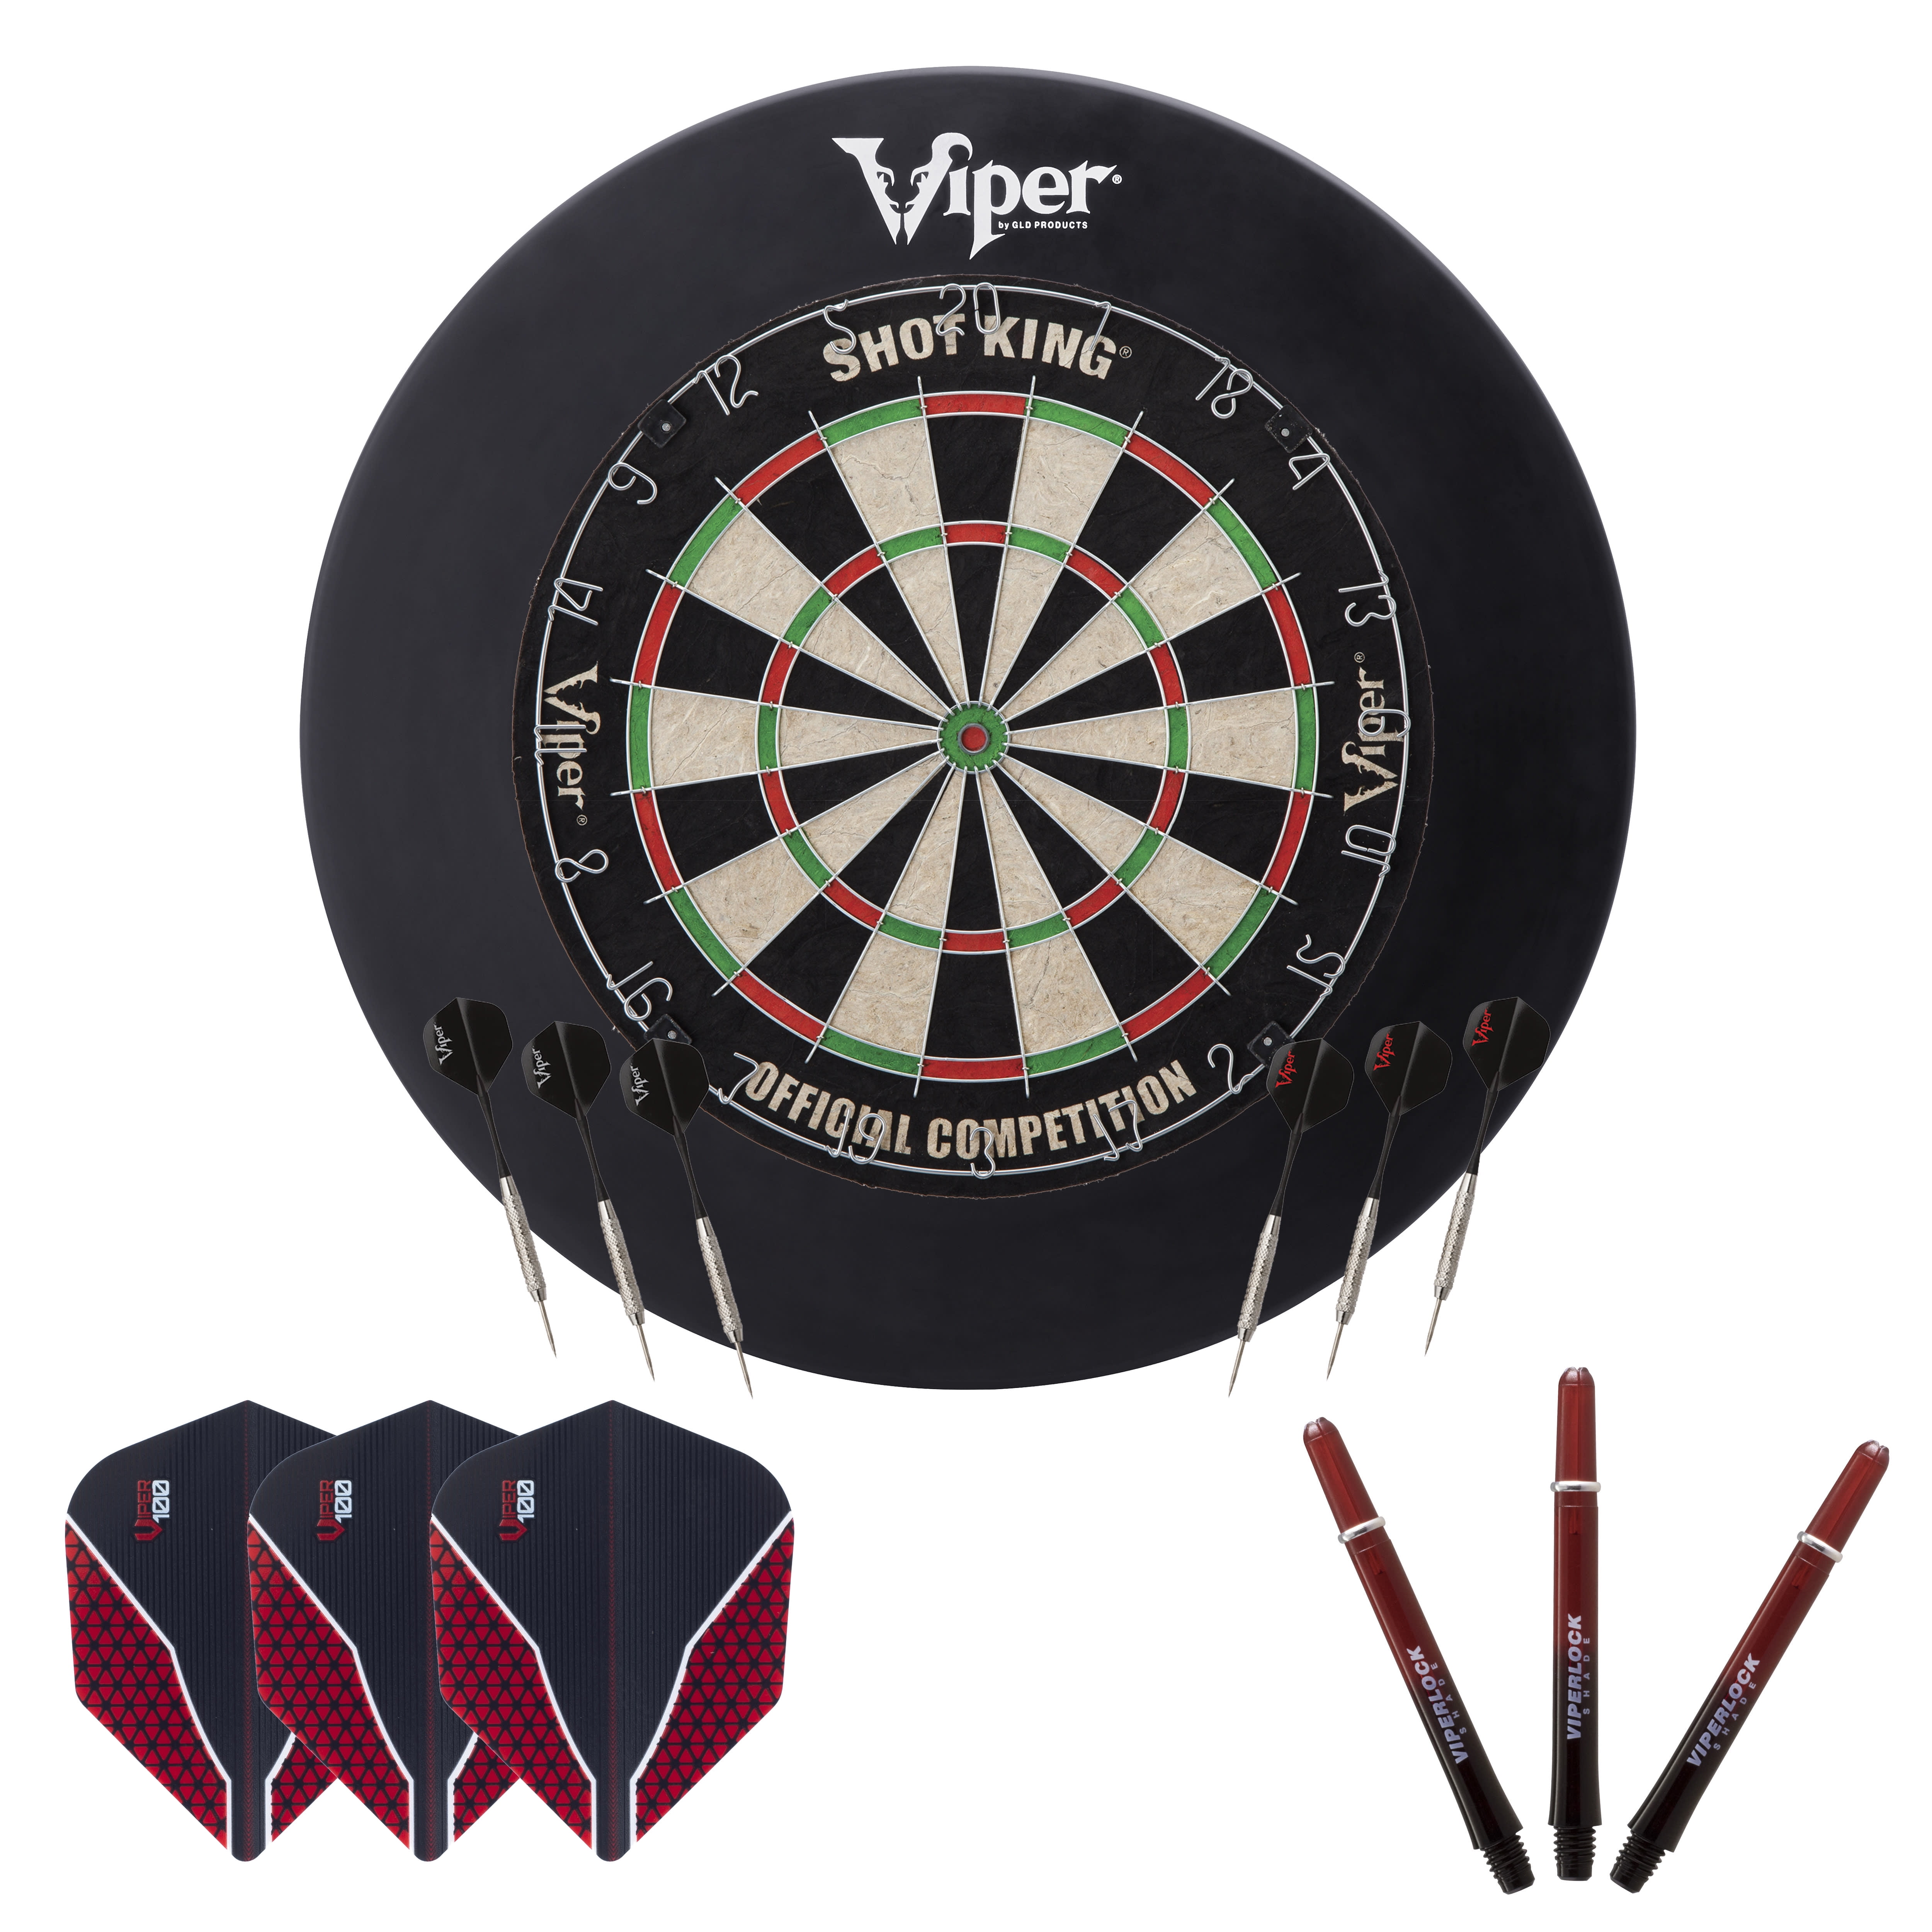 Viper Guardian Dartboard Surround Black, Viper Shot King Sisal Dartboard, Viper Shadow Buster Dartboard Lights, Viperlock Shade Shaft Medium Red